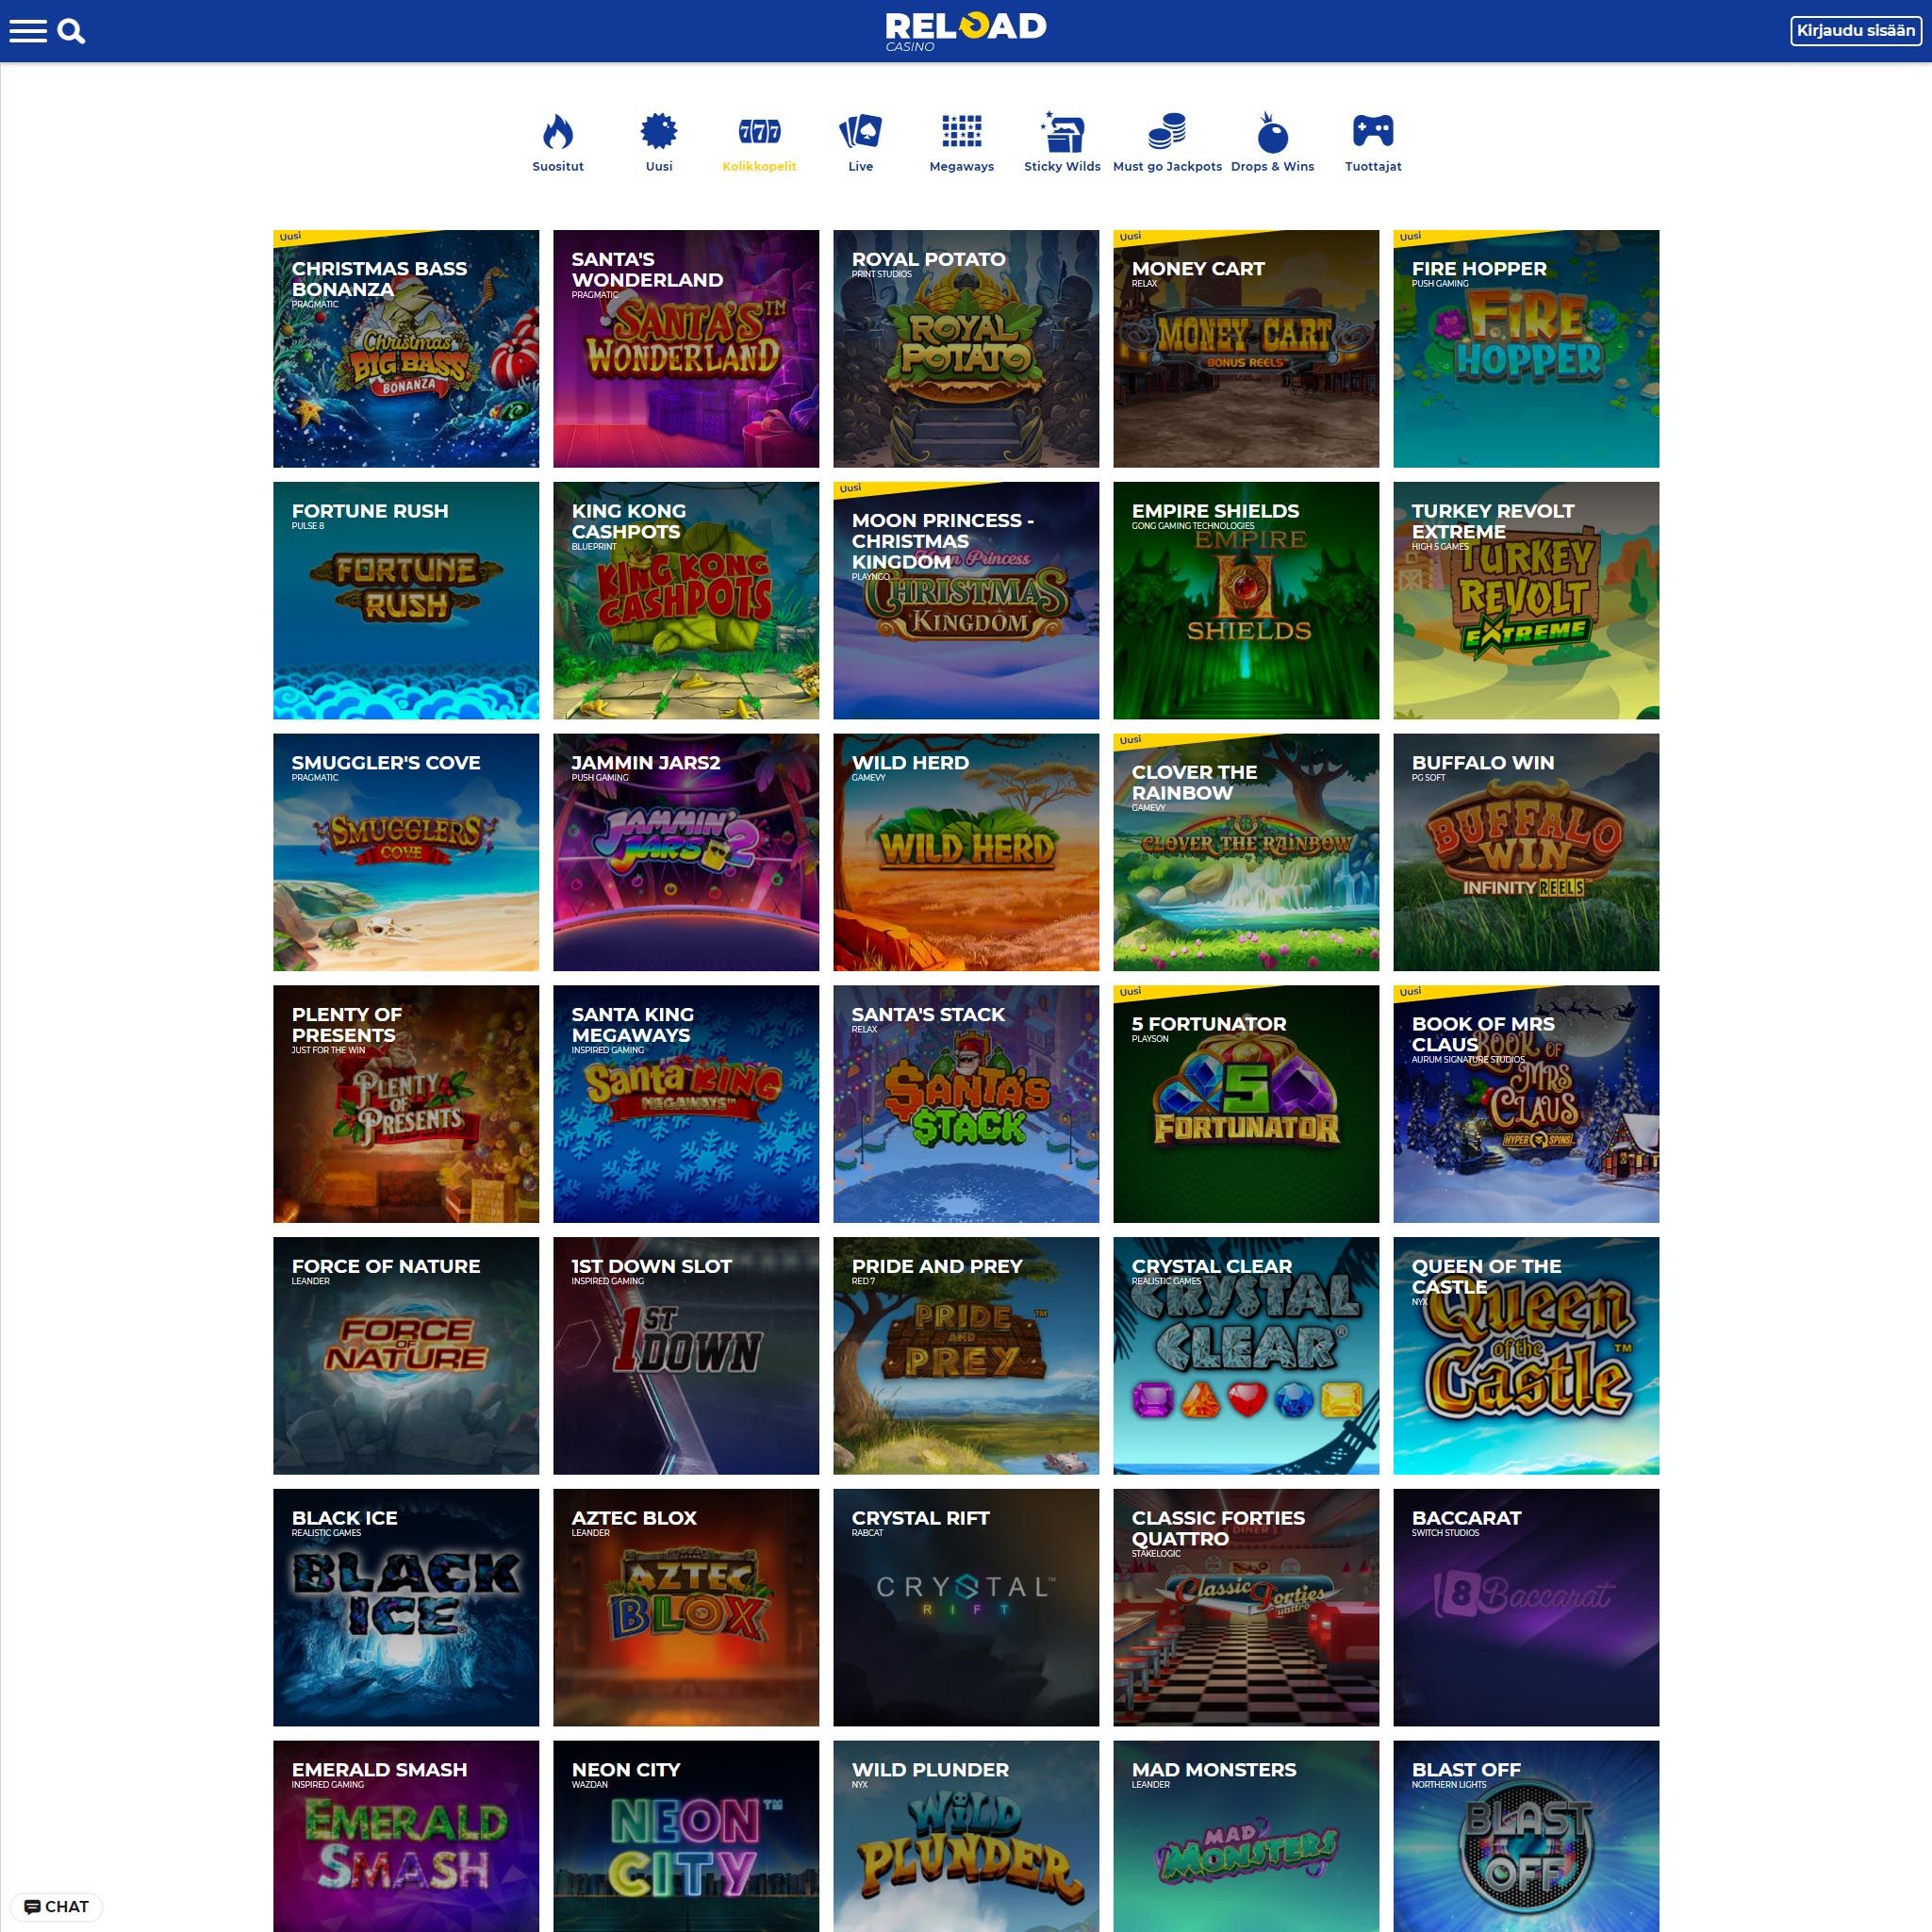 Reload Casino full games catalogue